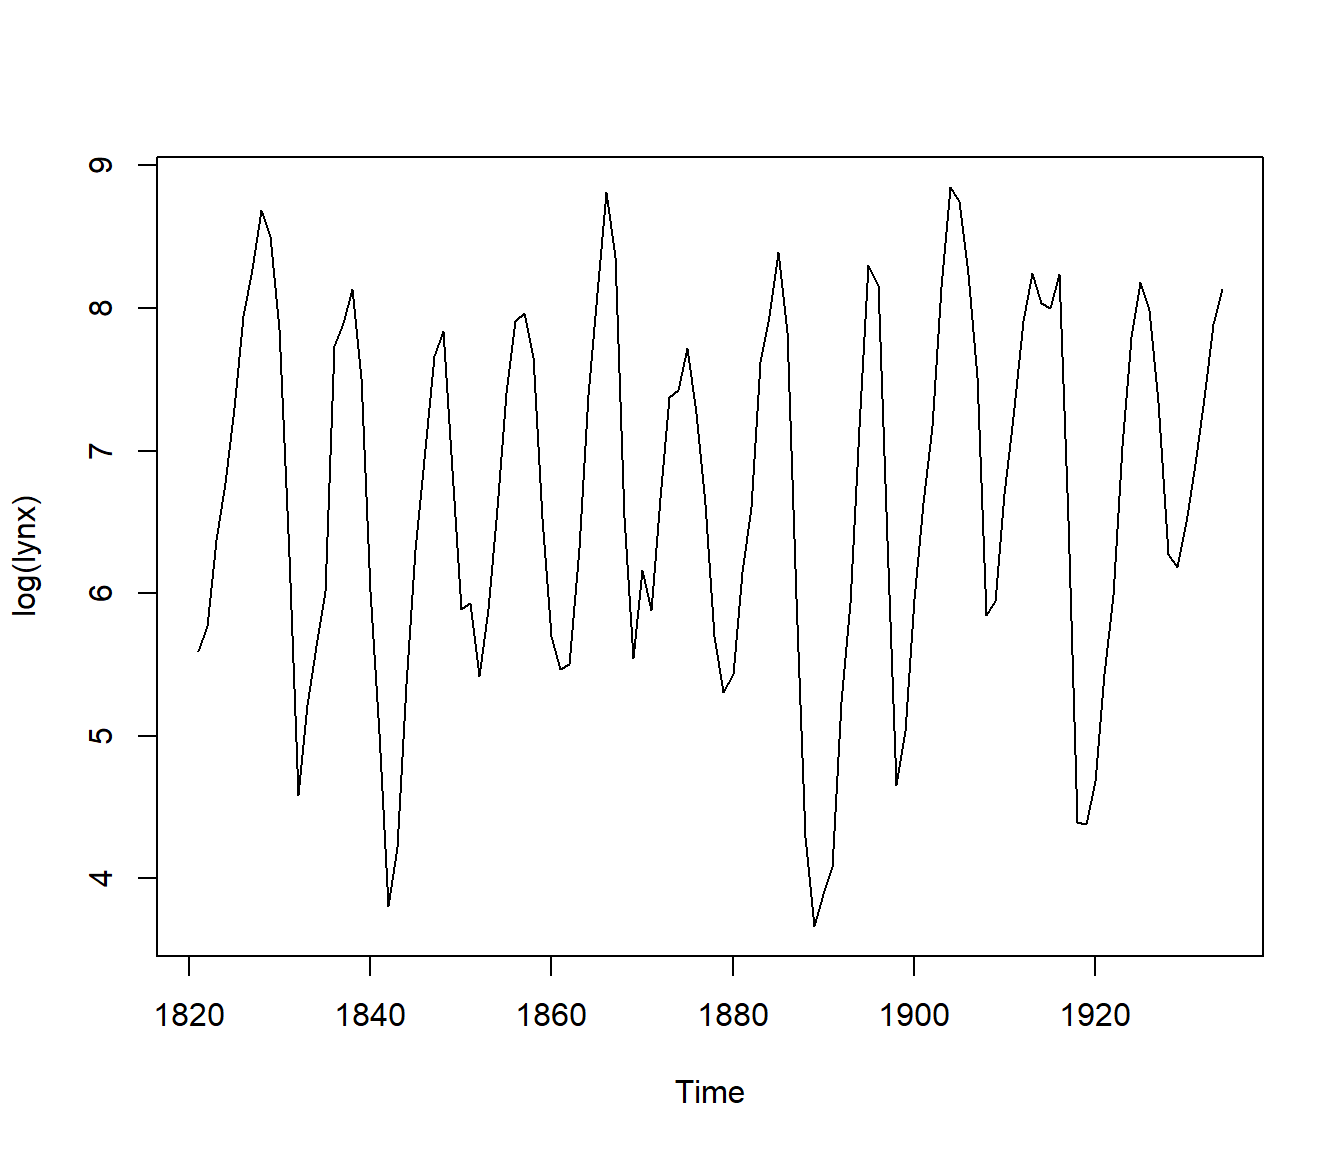 Lynx data (logarithmic scale).